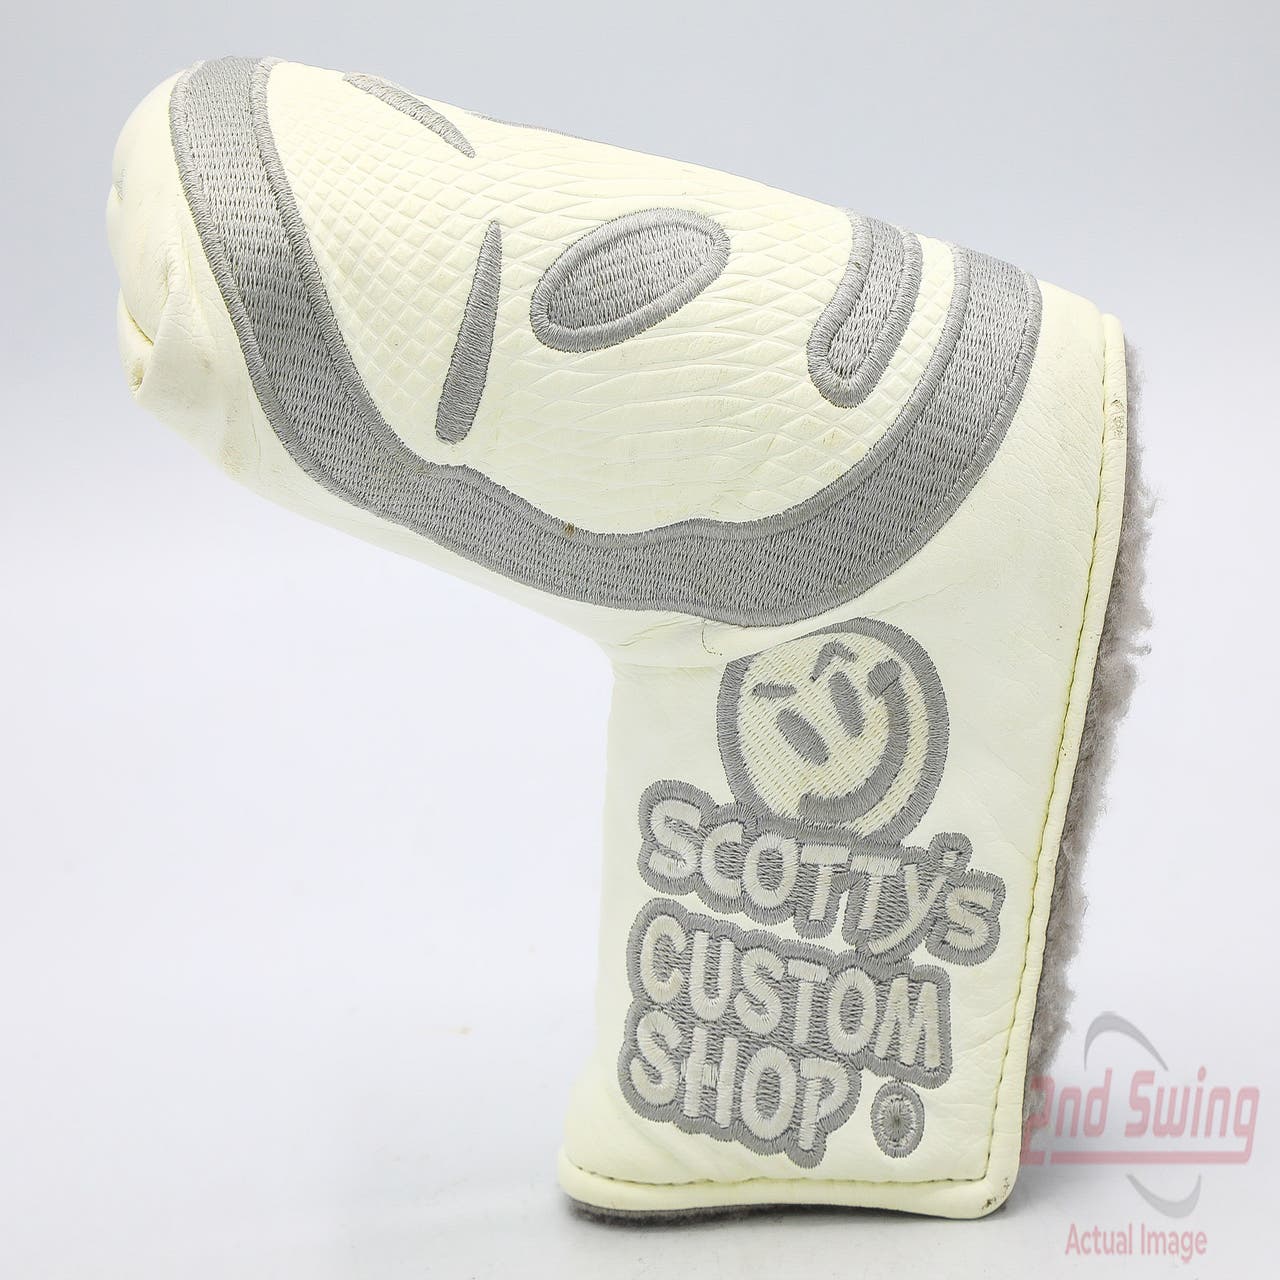 Scotty's Custom Shop - Scotty Cameron